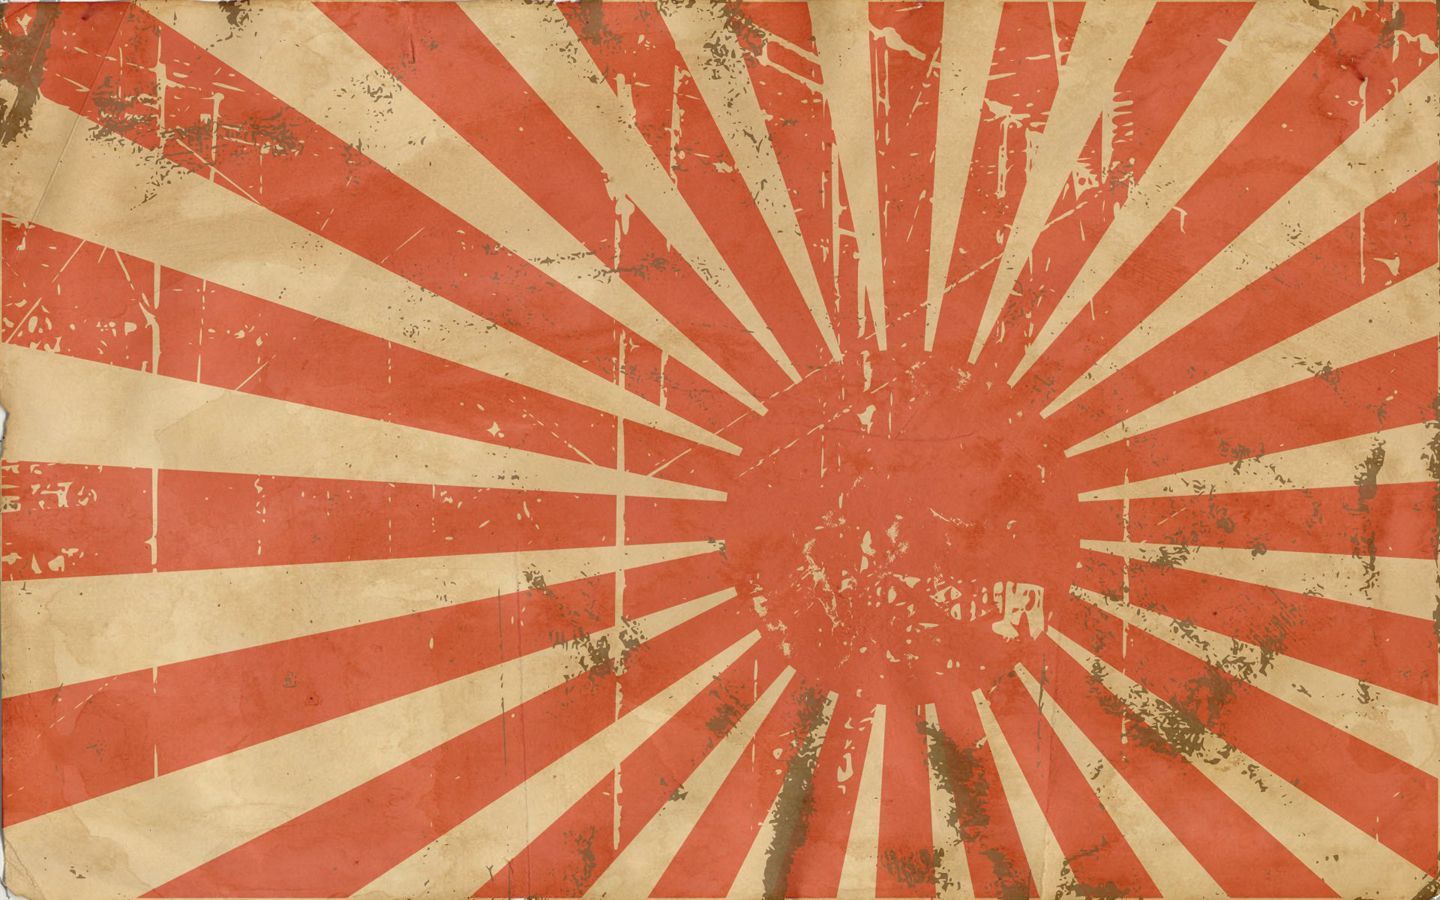 Japanese Rising Sun Wallpaper Free Japanese Rising Sun Background